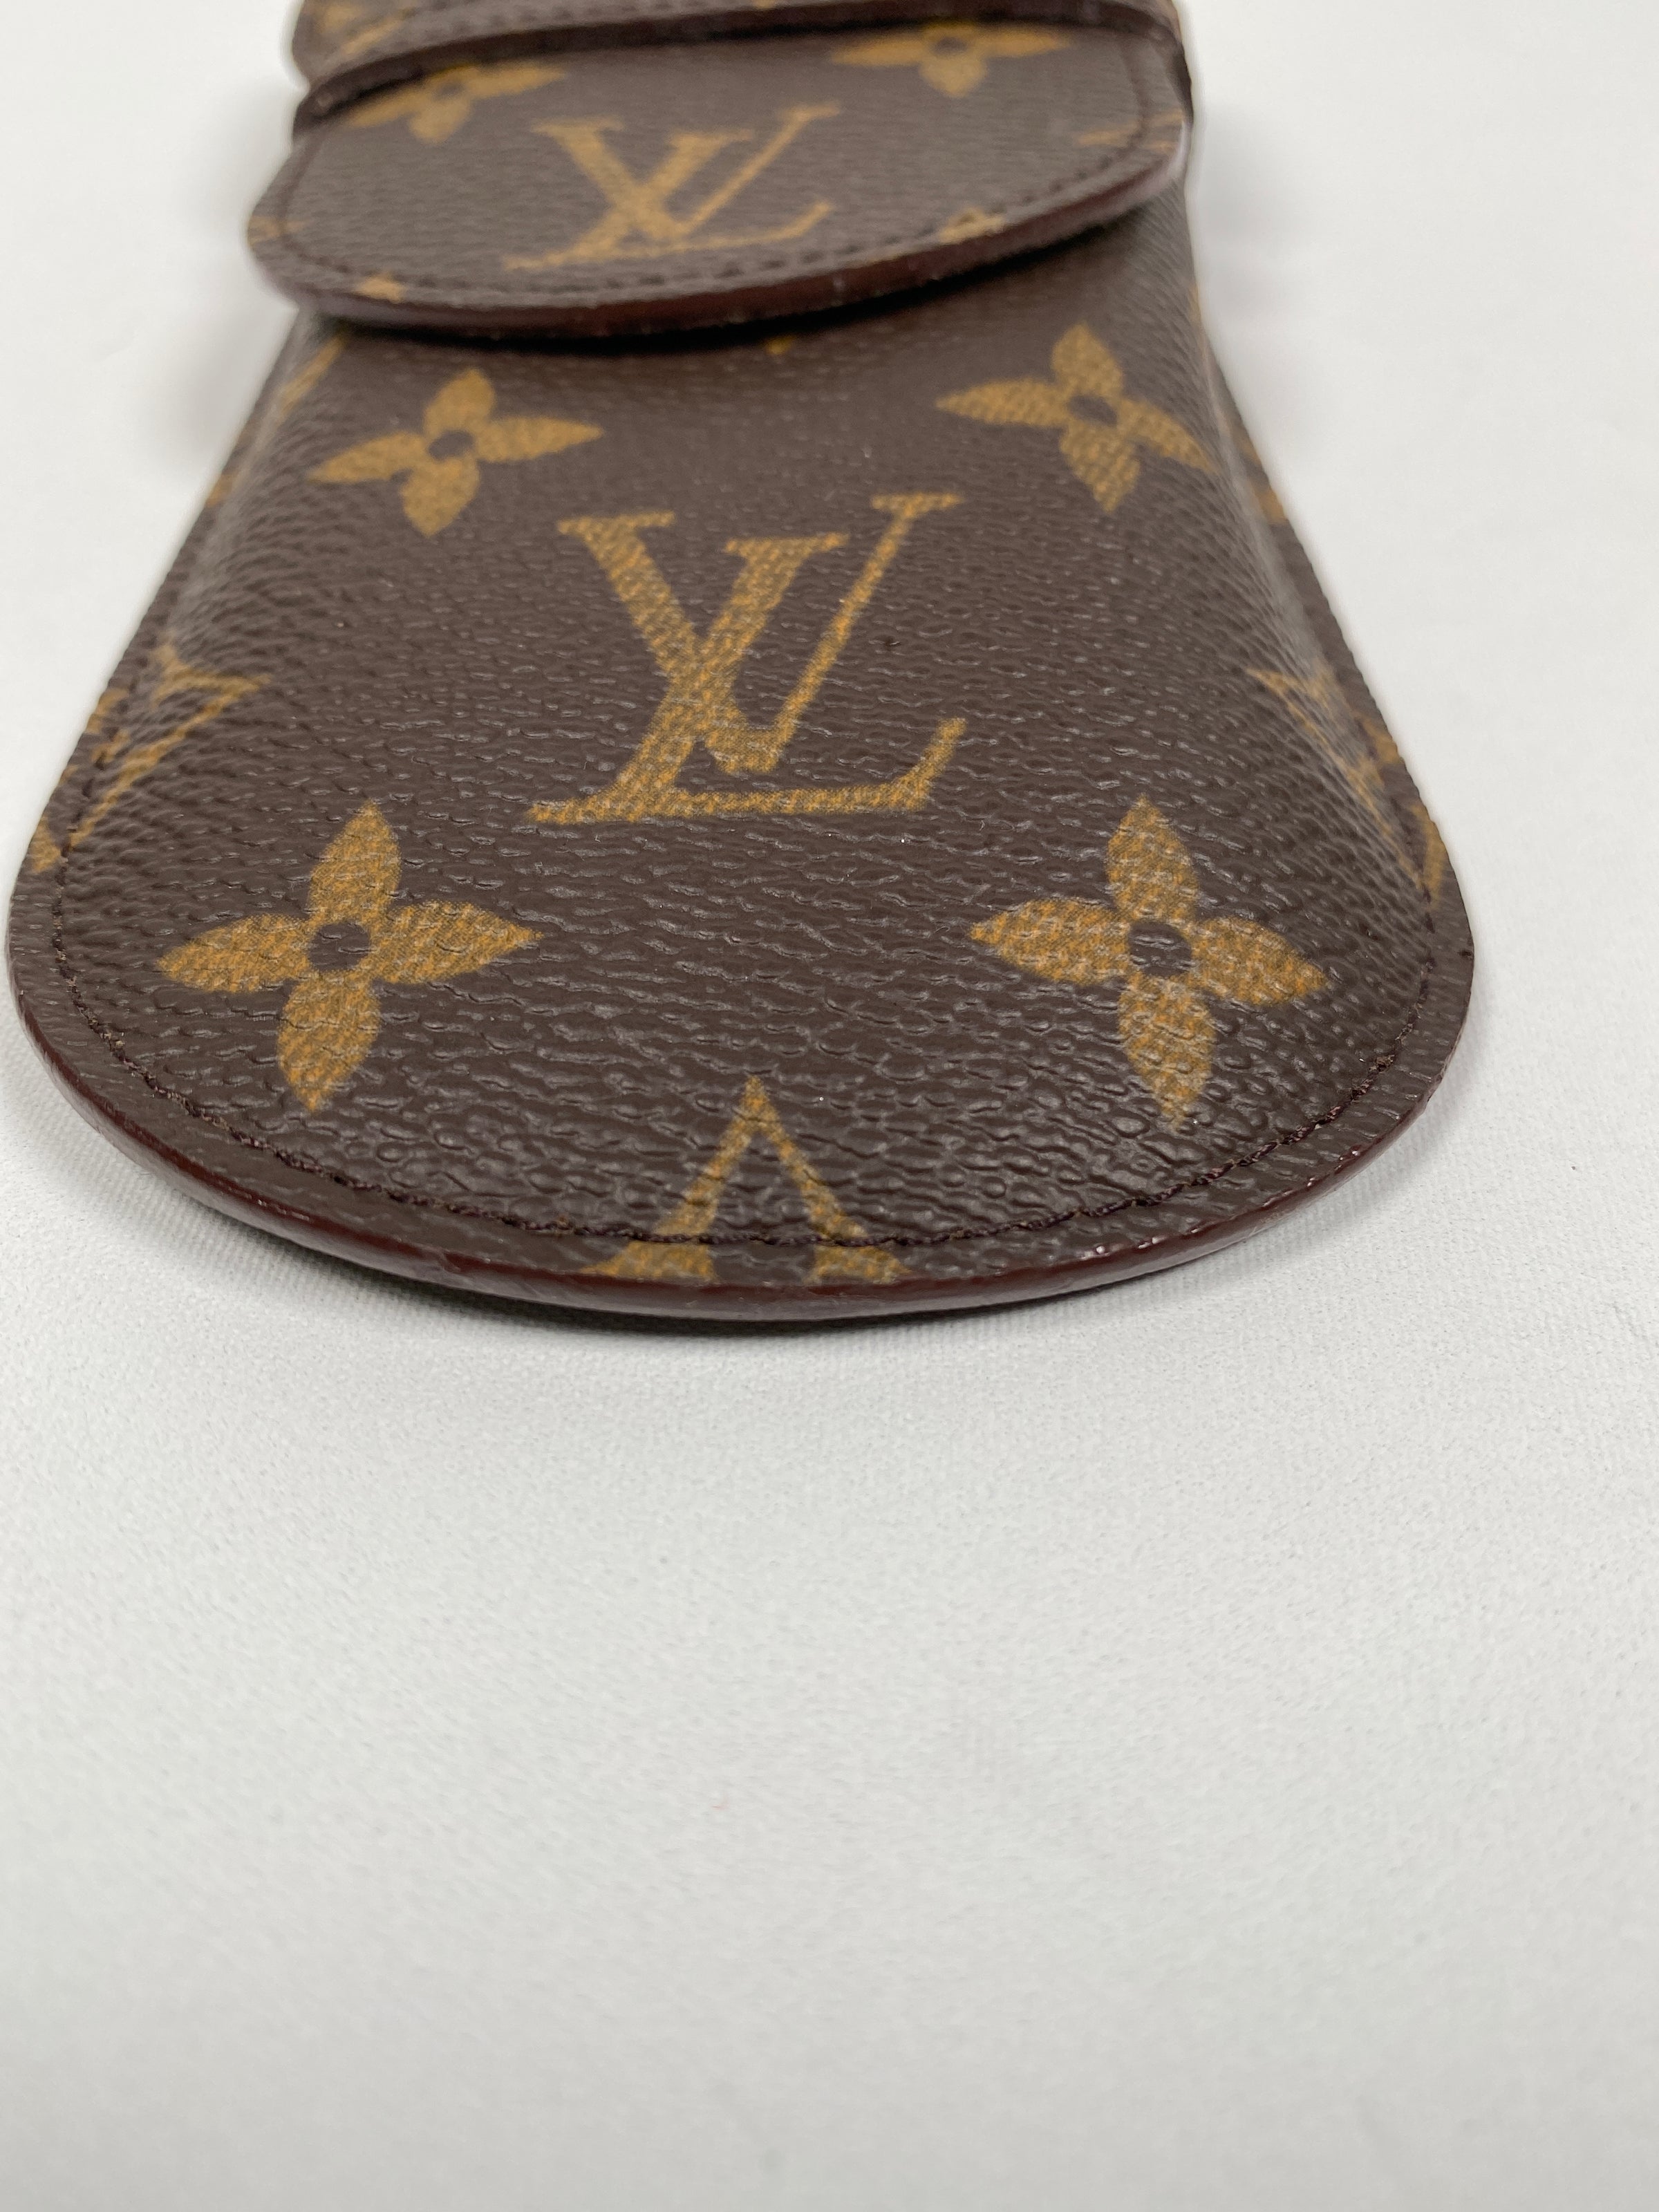 Authentic Louis Vuitton Monogram Etui Lunettes Rabat M62970 Glasses Case  103133